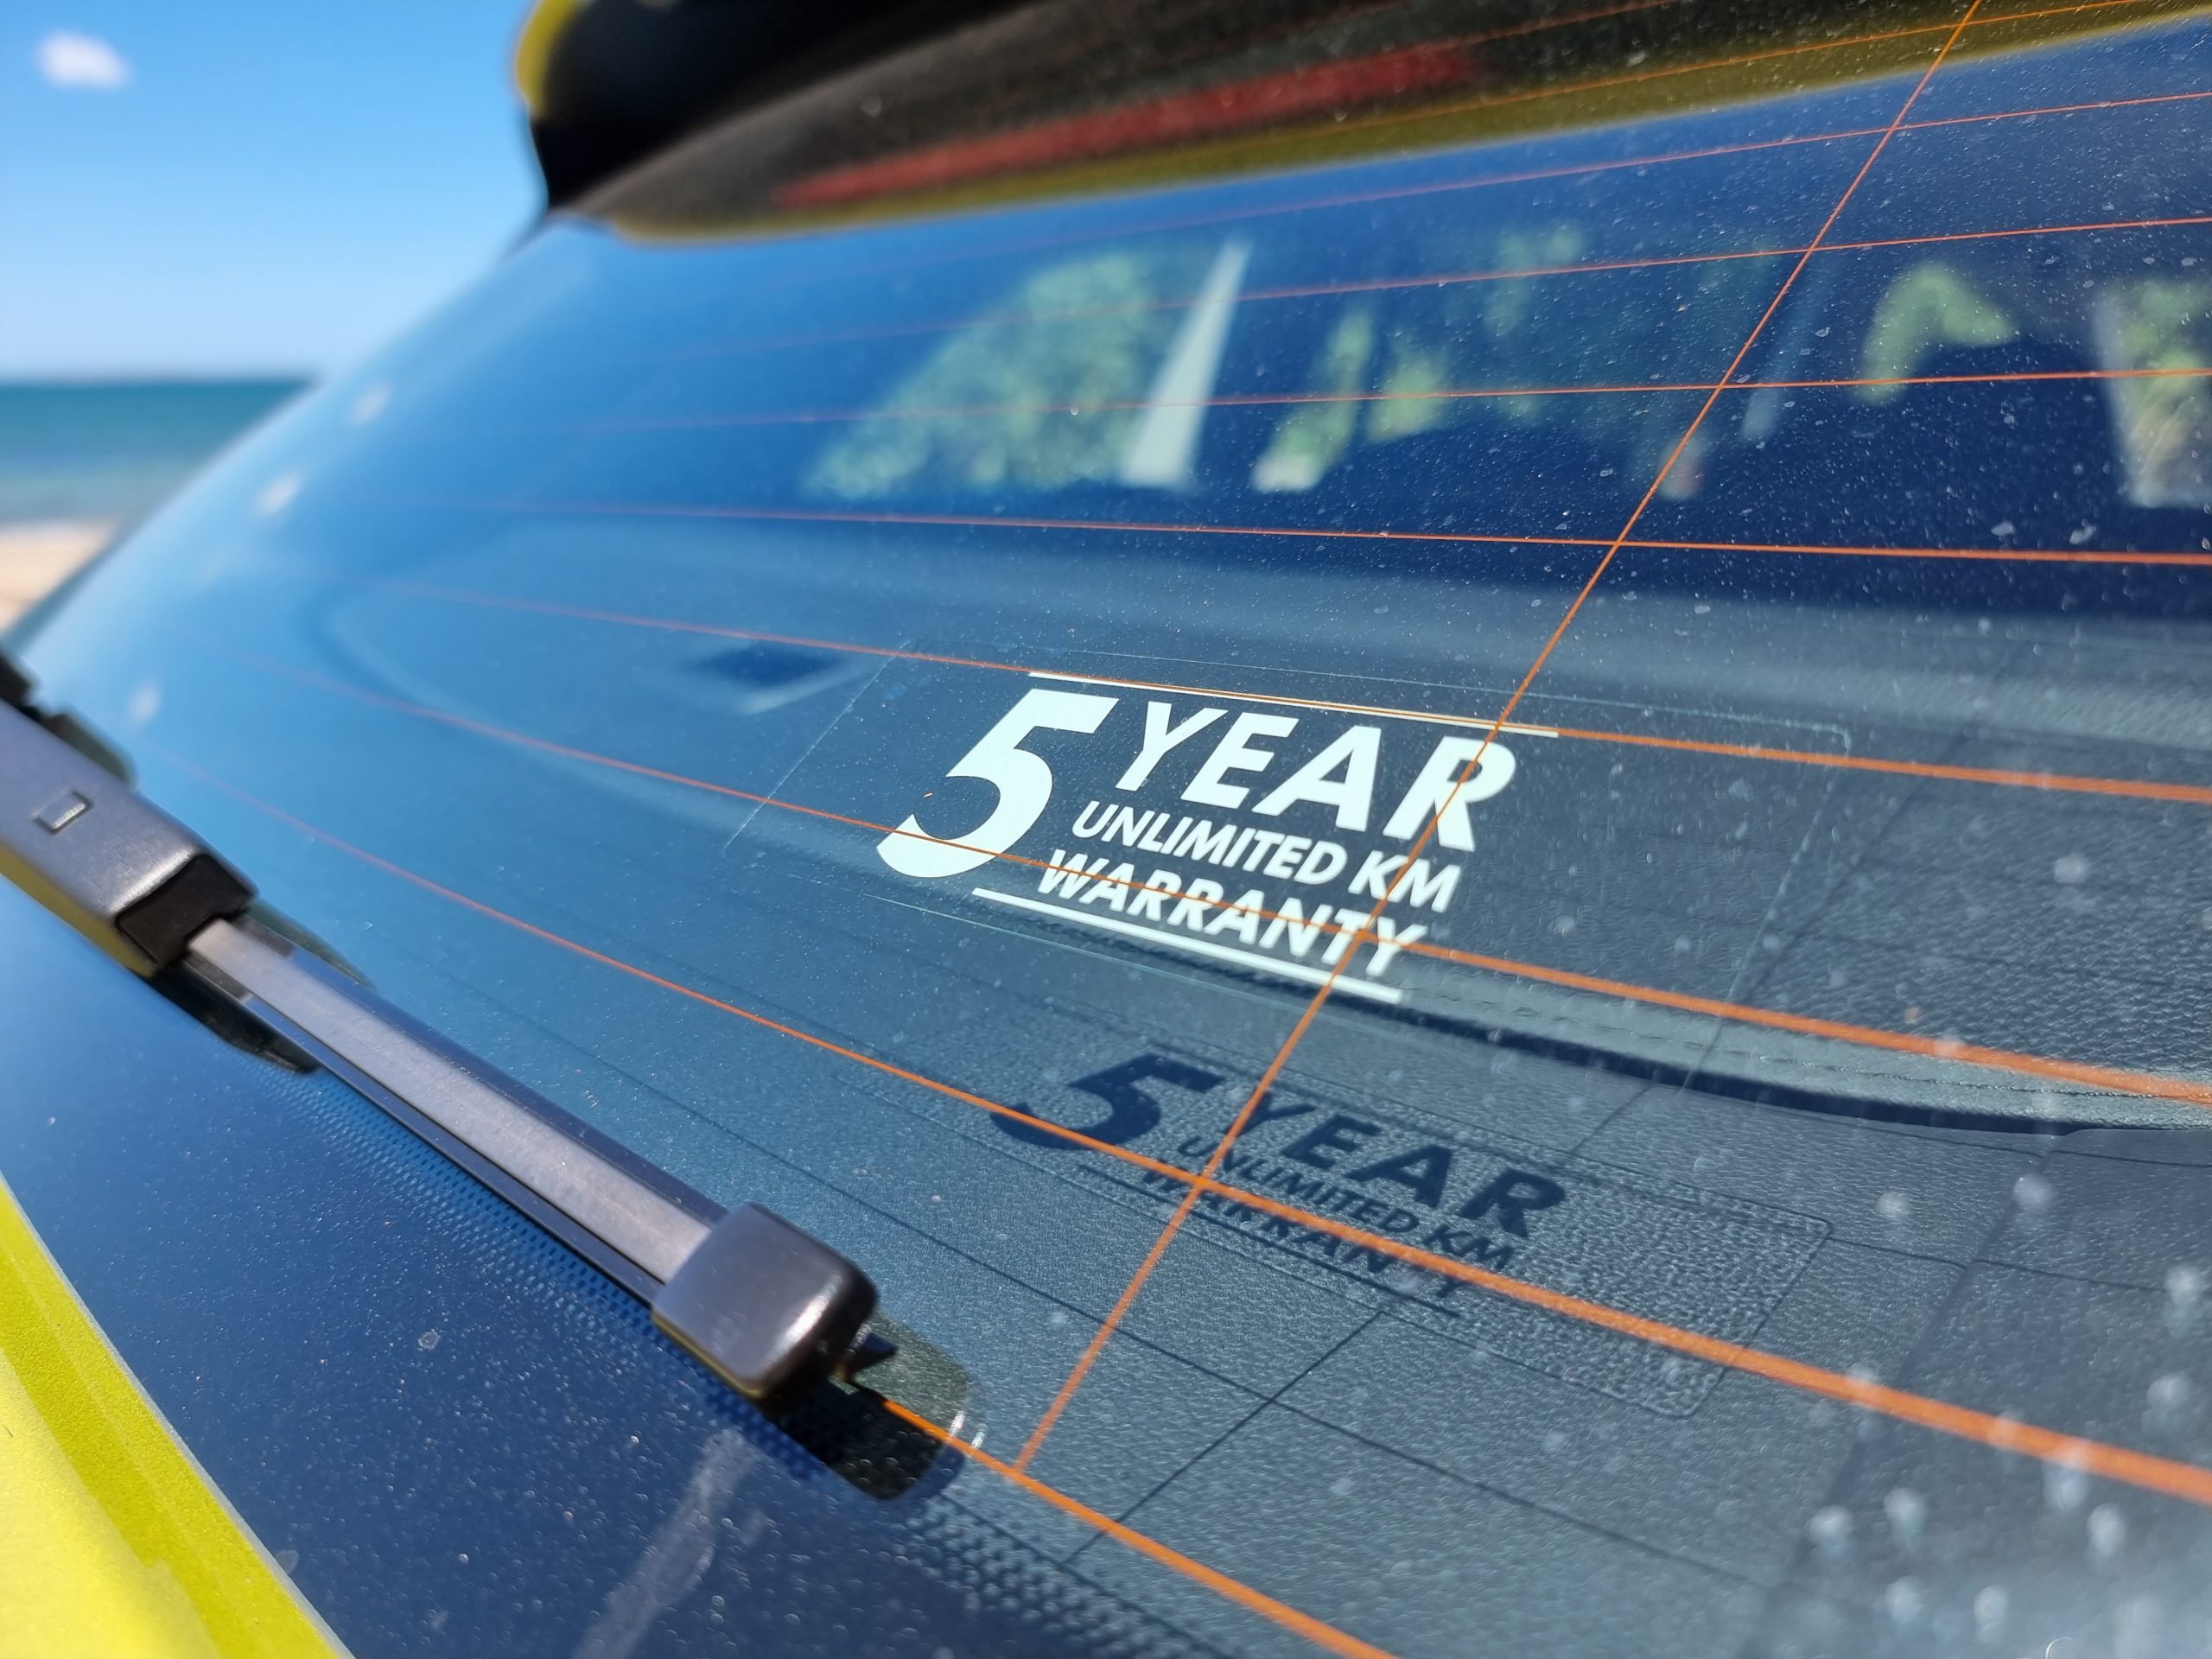 2022 VW Golf Wagon warranty sticker